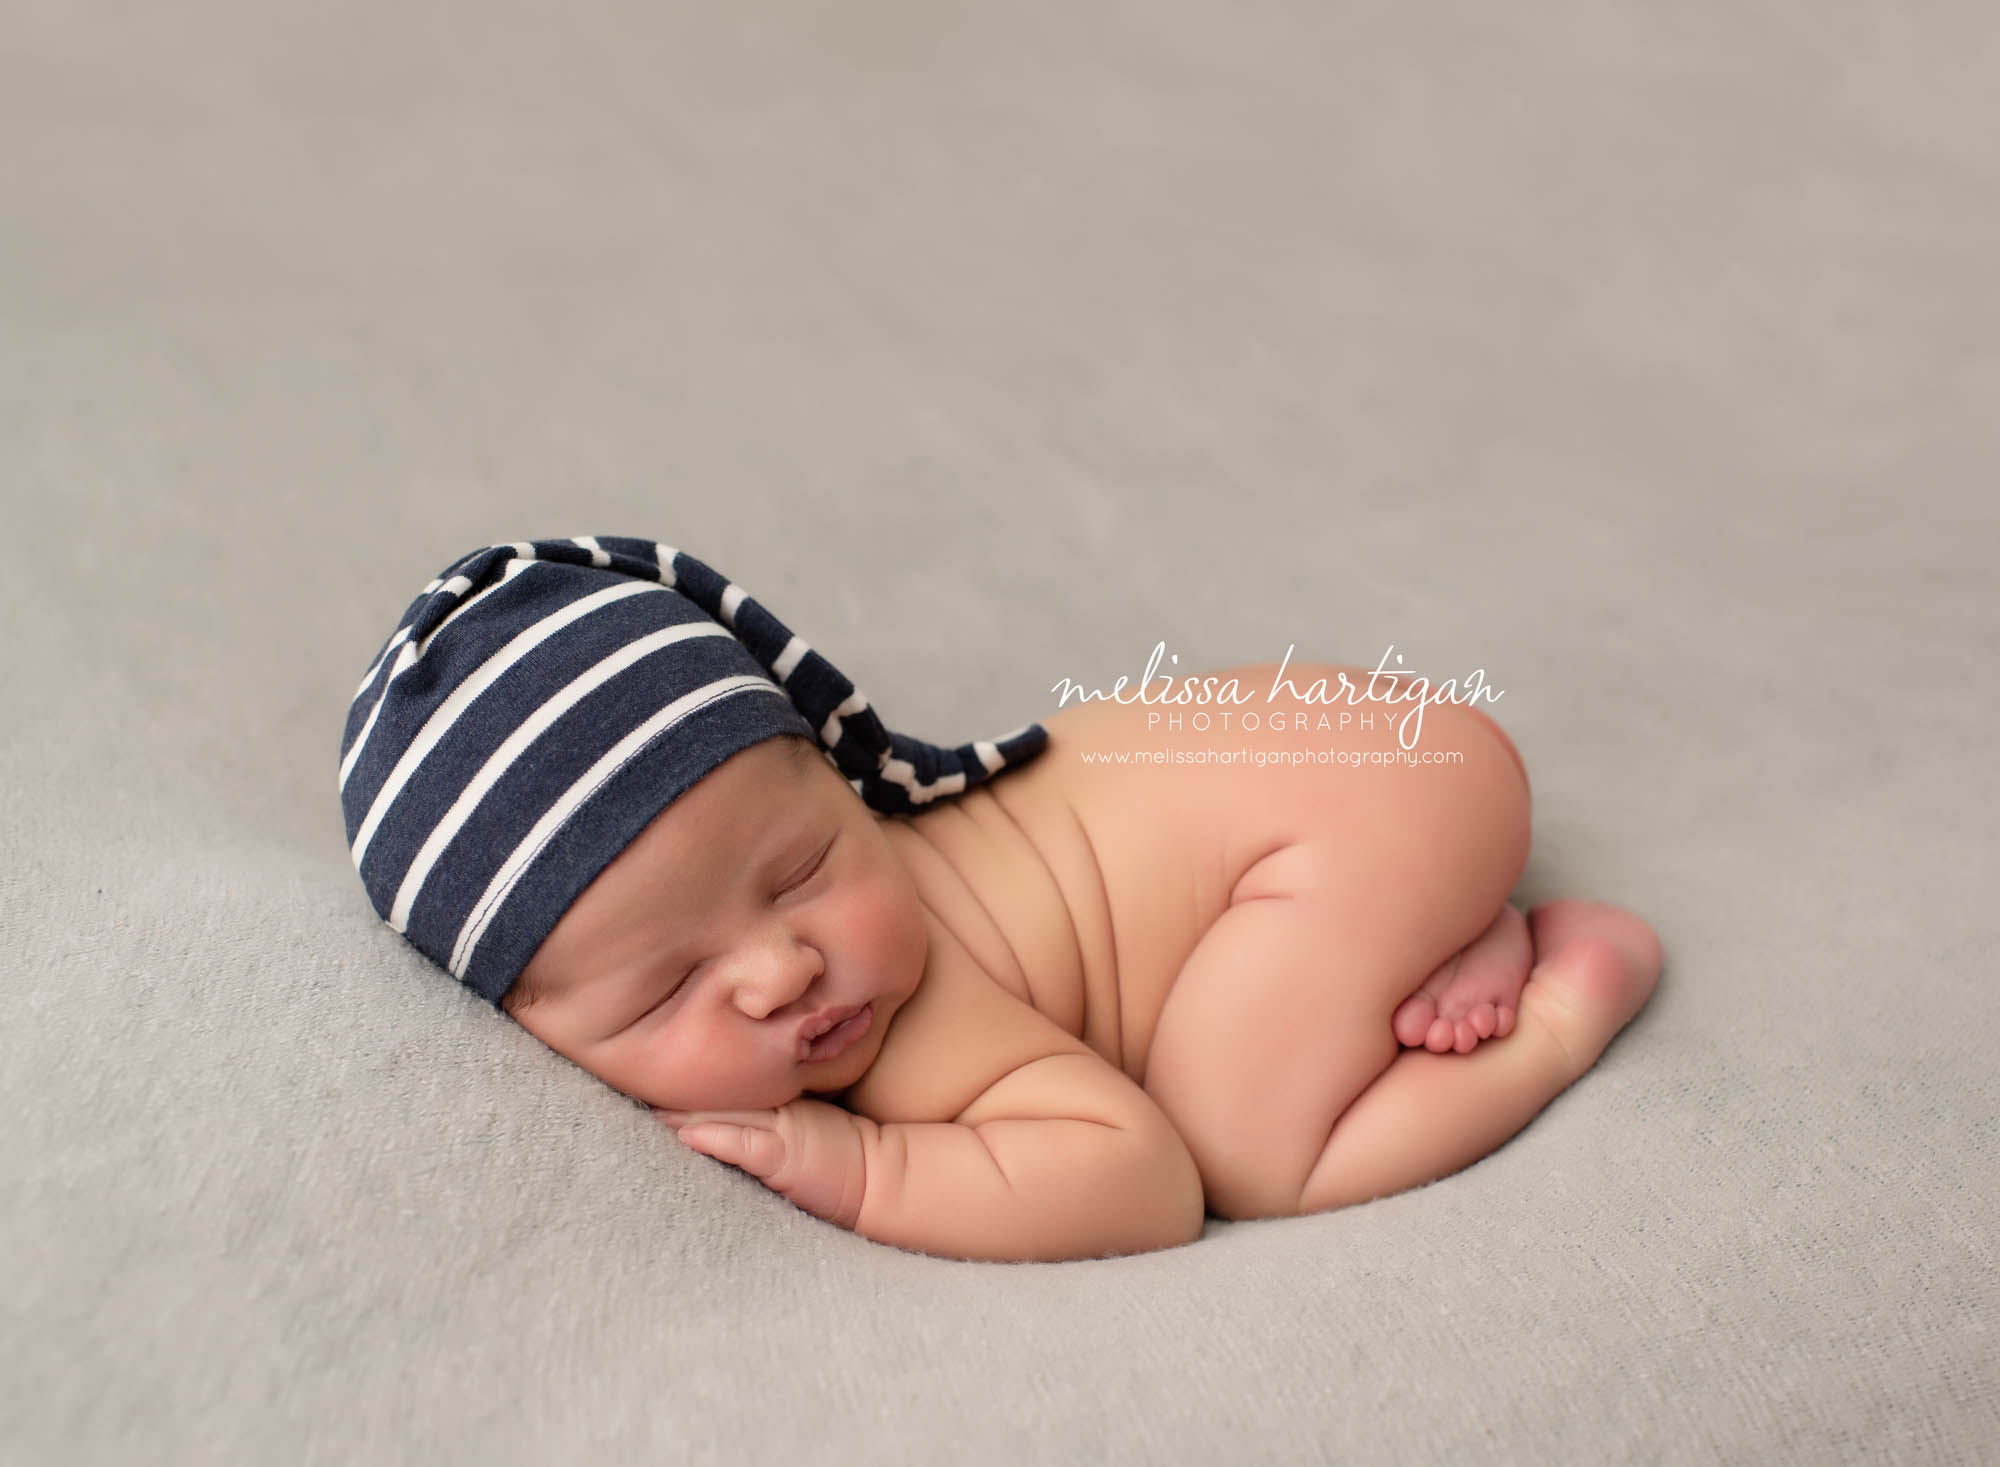 newborn baby posed bum up pose newborn photography studio session baby wearing navy blue and white striped sleepy cap hat